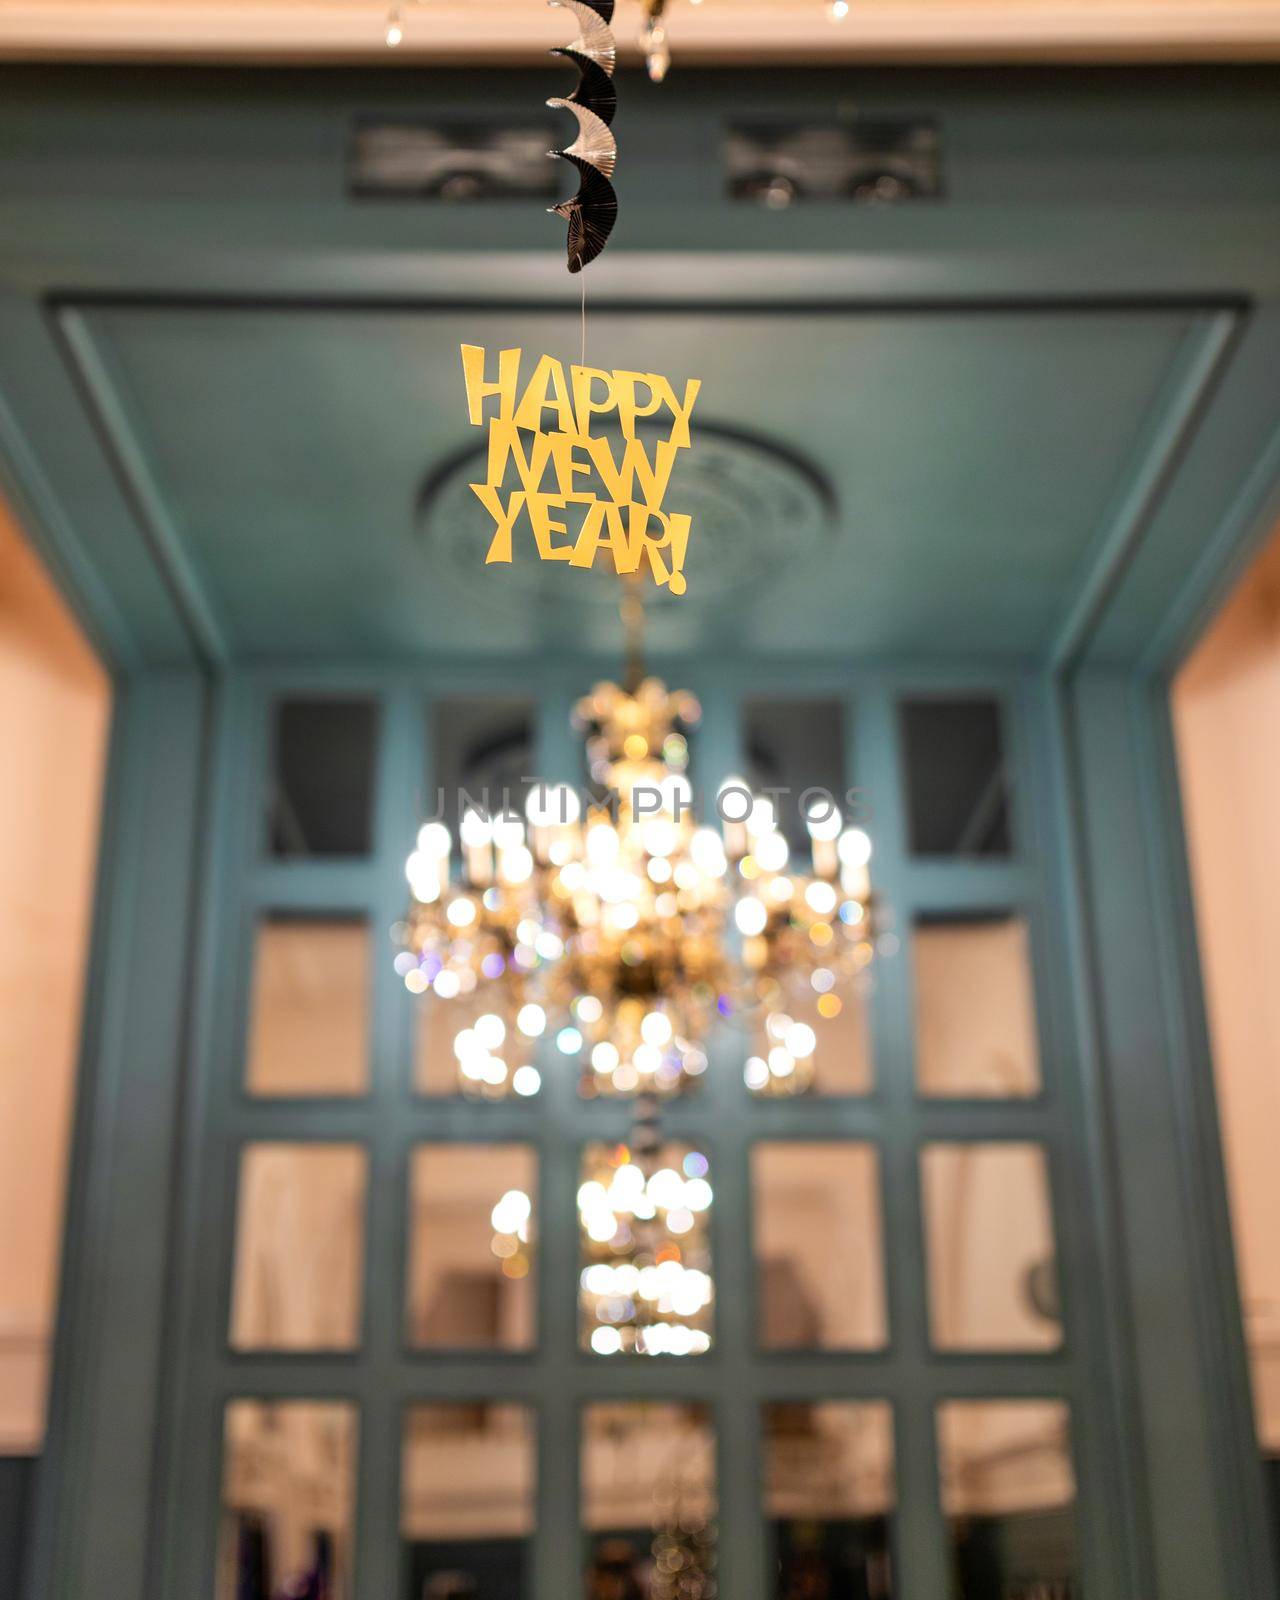 Happy New Year sticker in the restaurant interior by ferhad